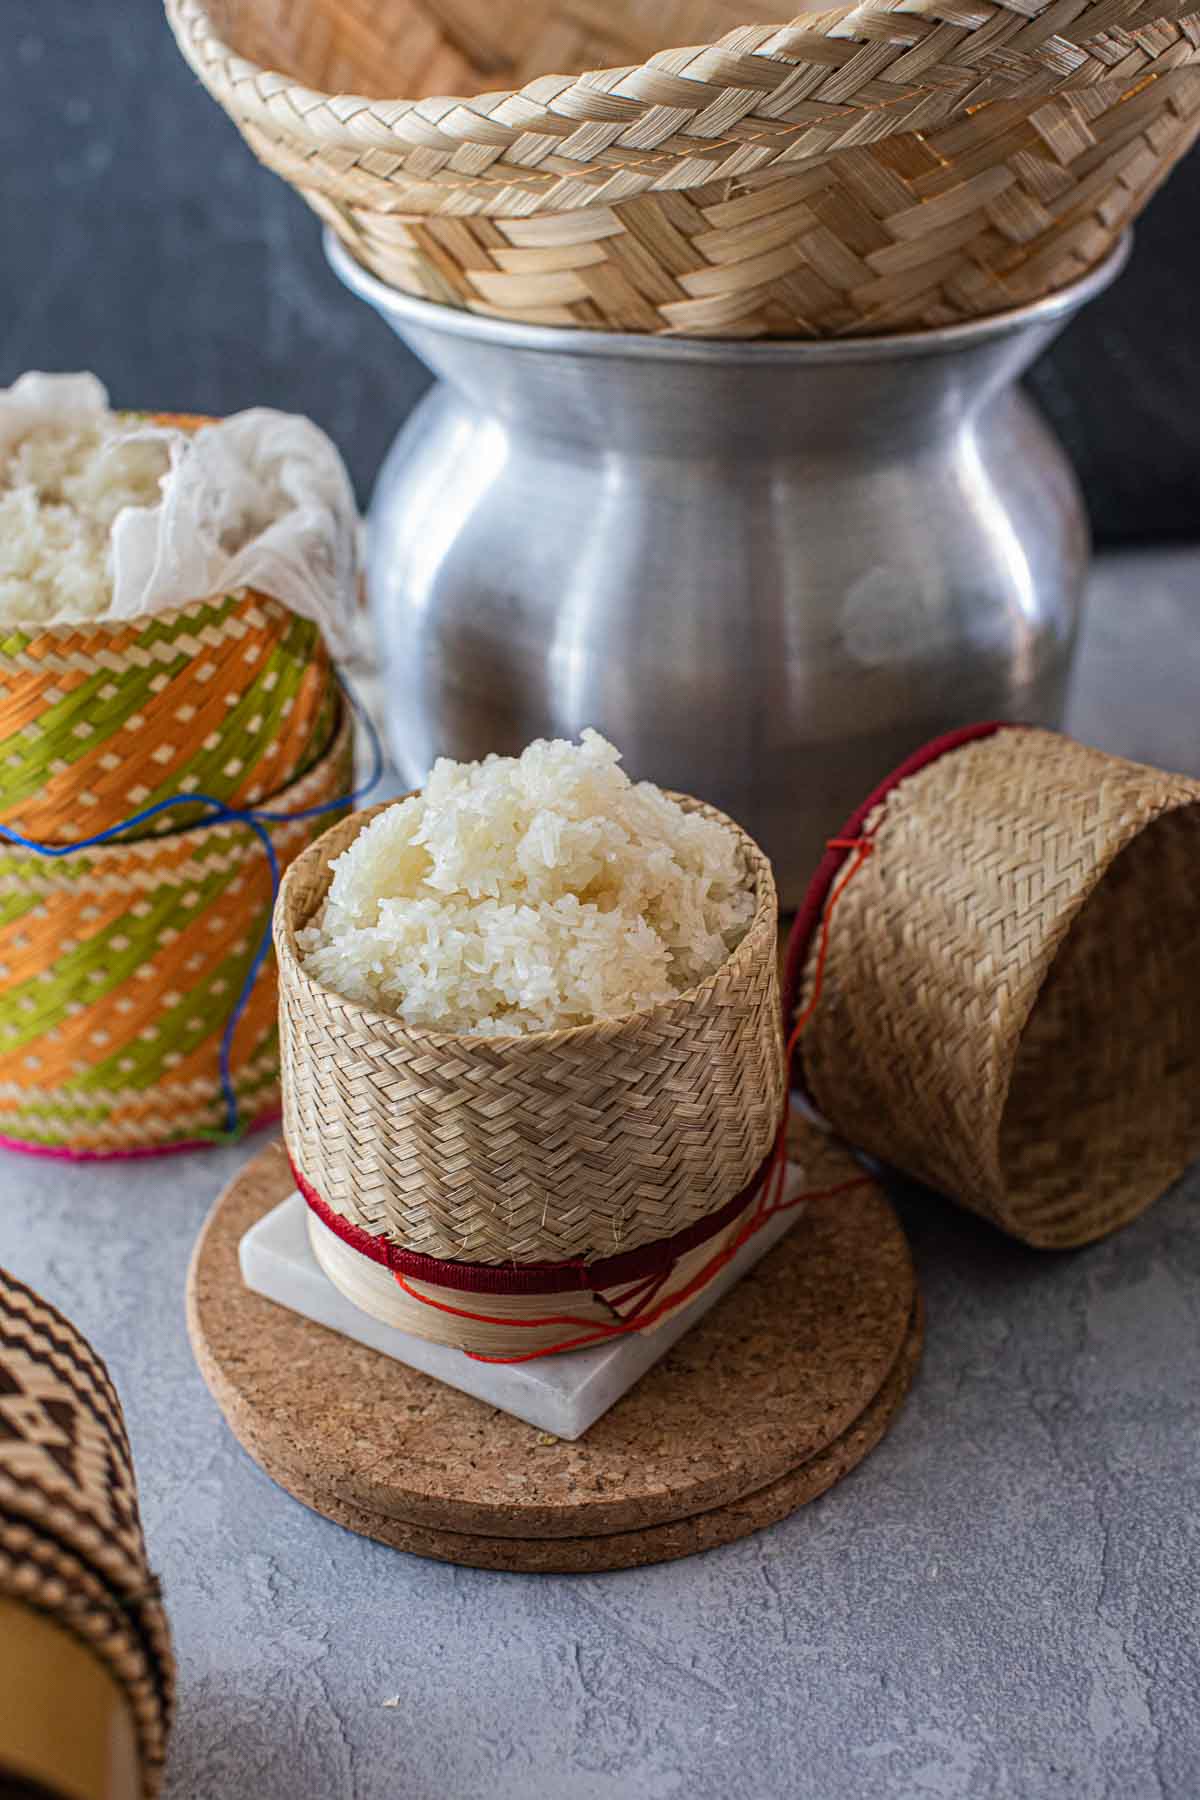 https://www.simplysuwanee.com/wp-content/uploads/2019/04/how-to-make-thai-sticky-rice-5.jpg